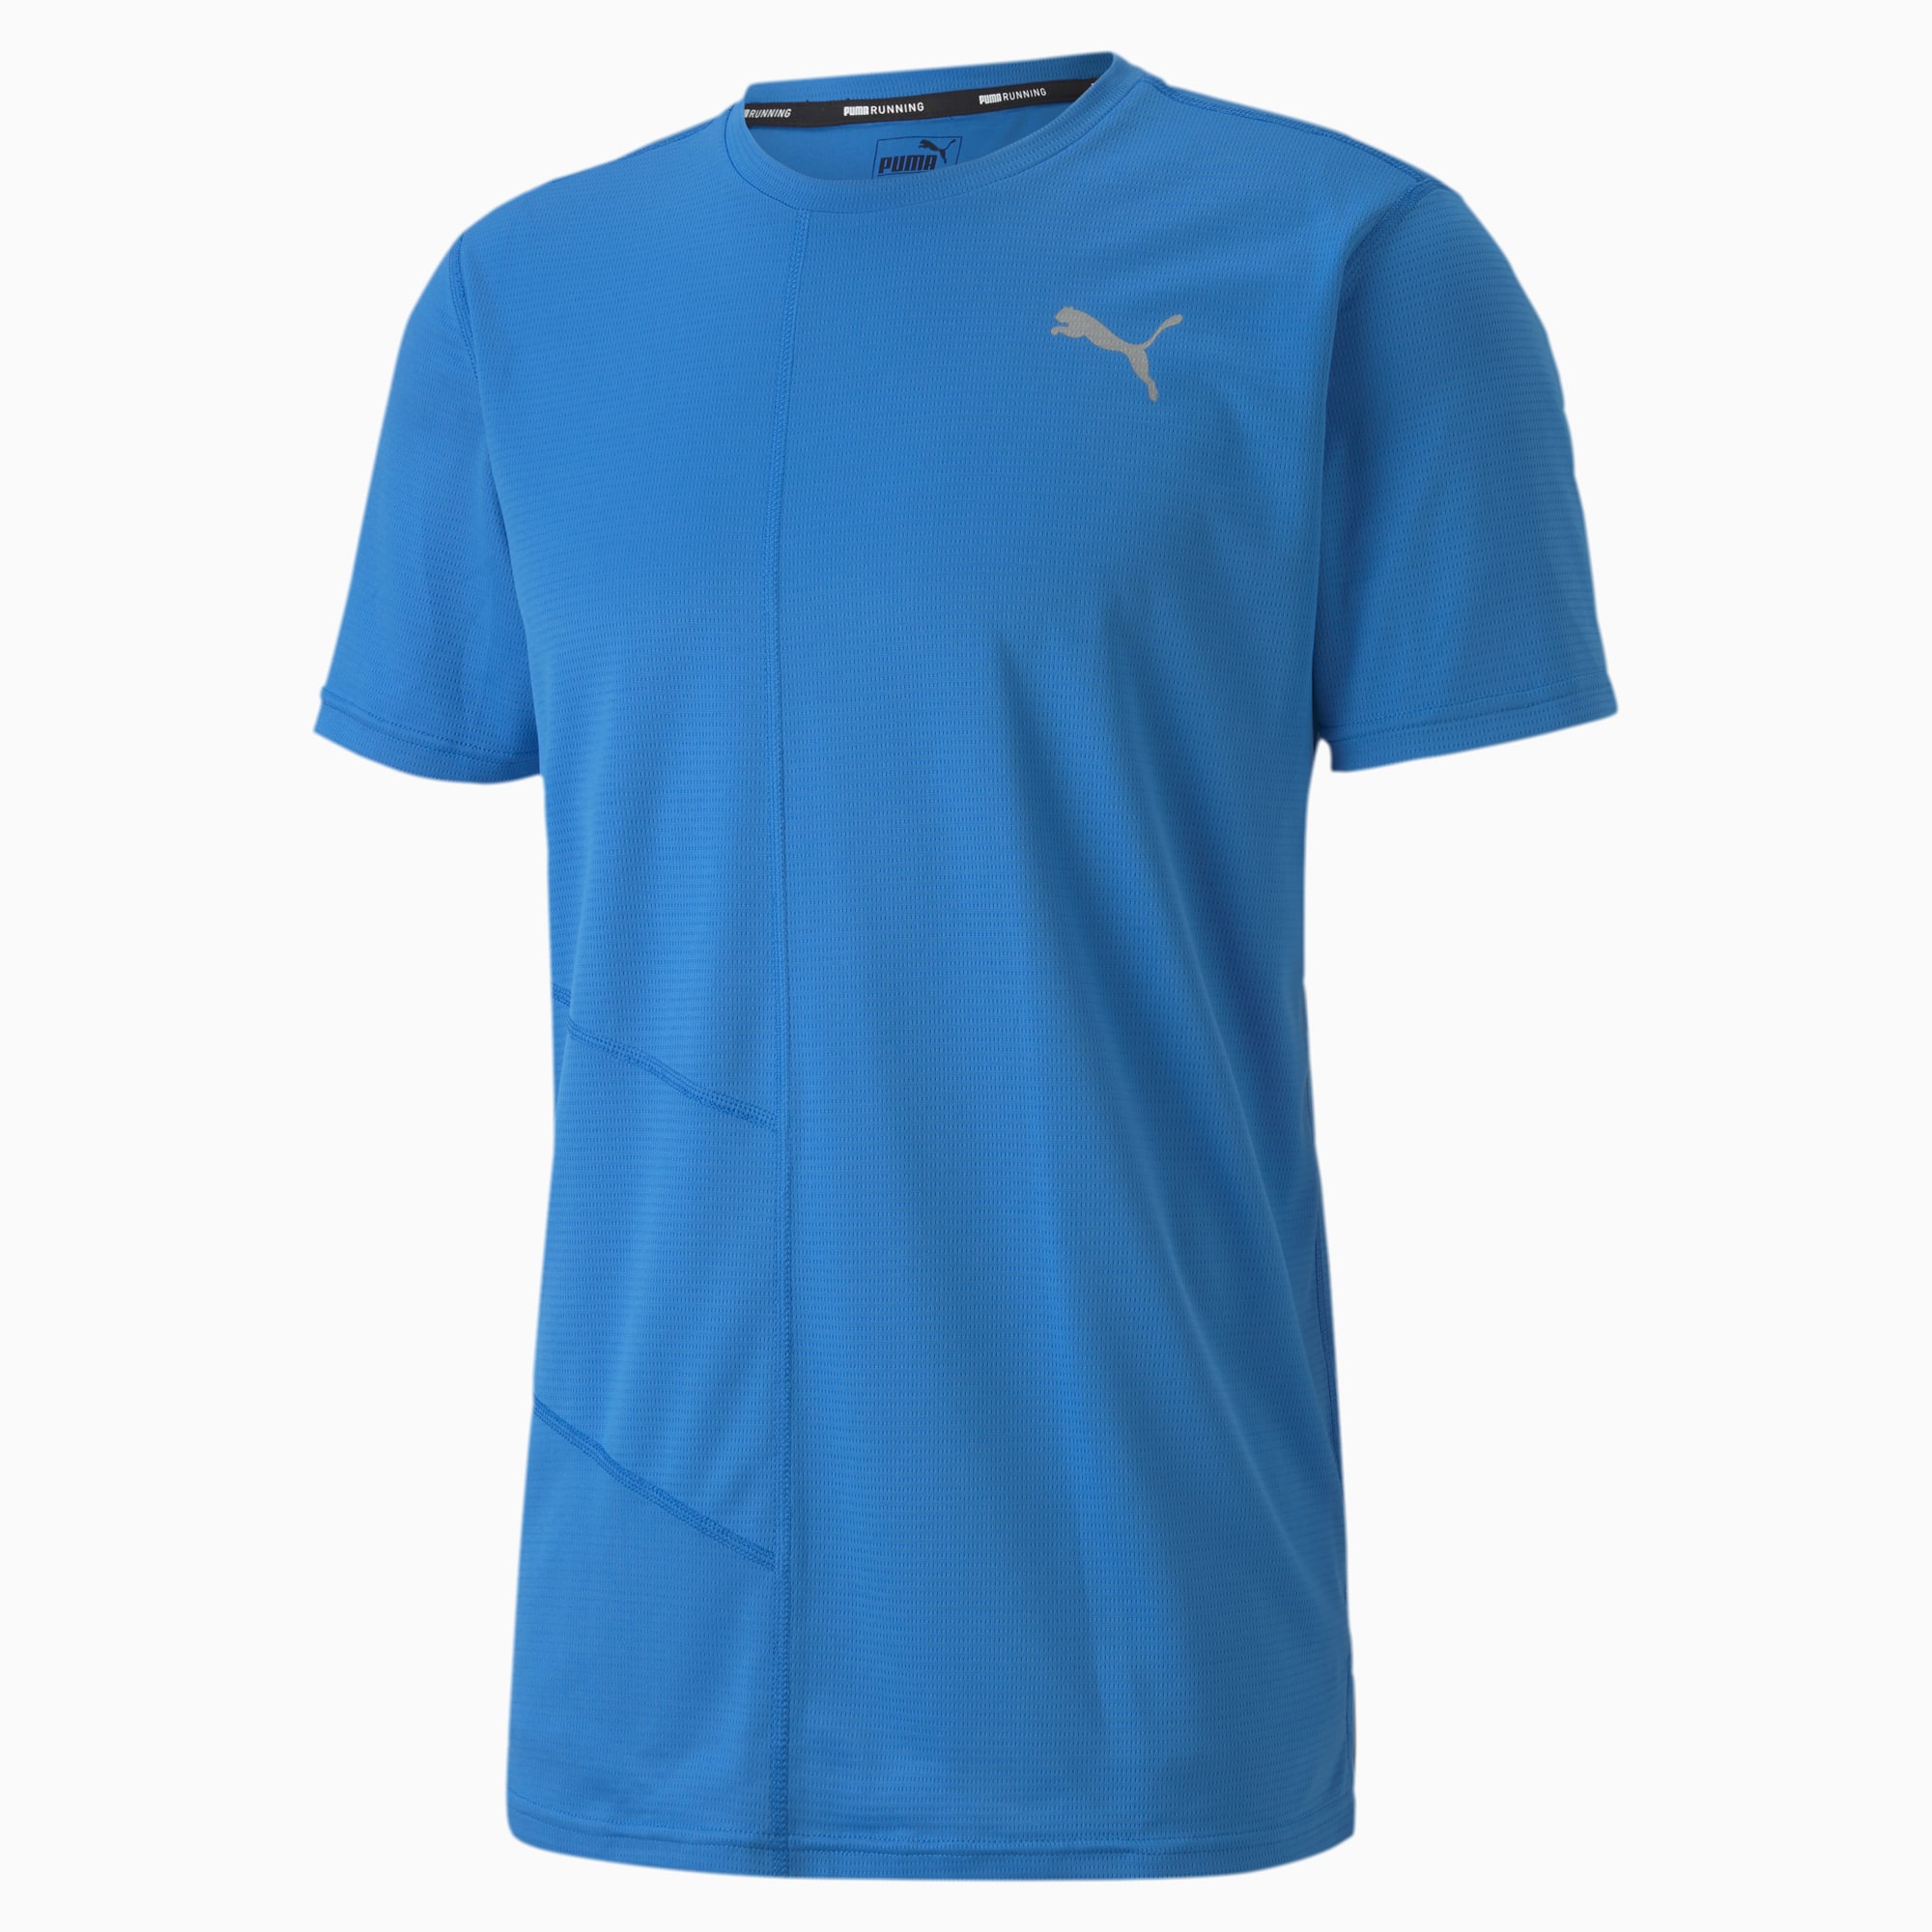 IGNITE Men's Running T-Shirt, Palace Blue, large-SEA